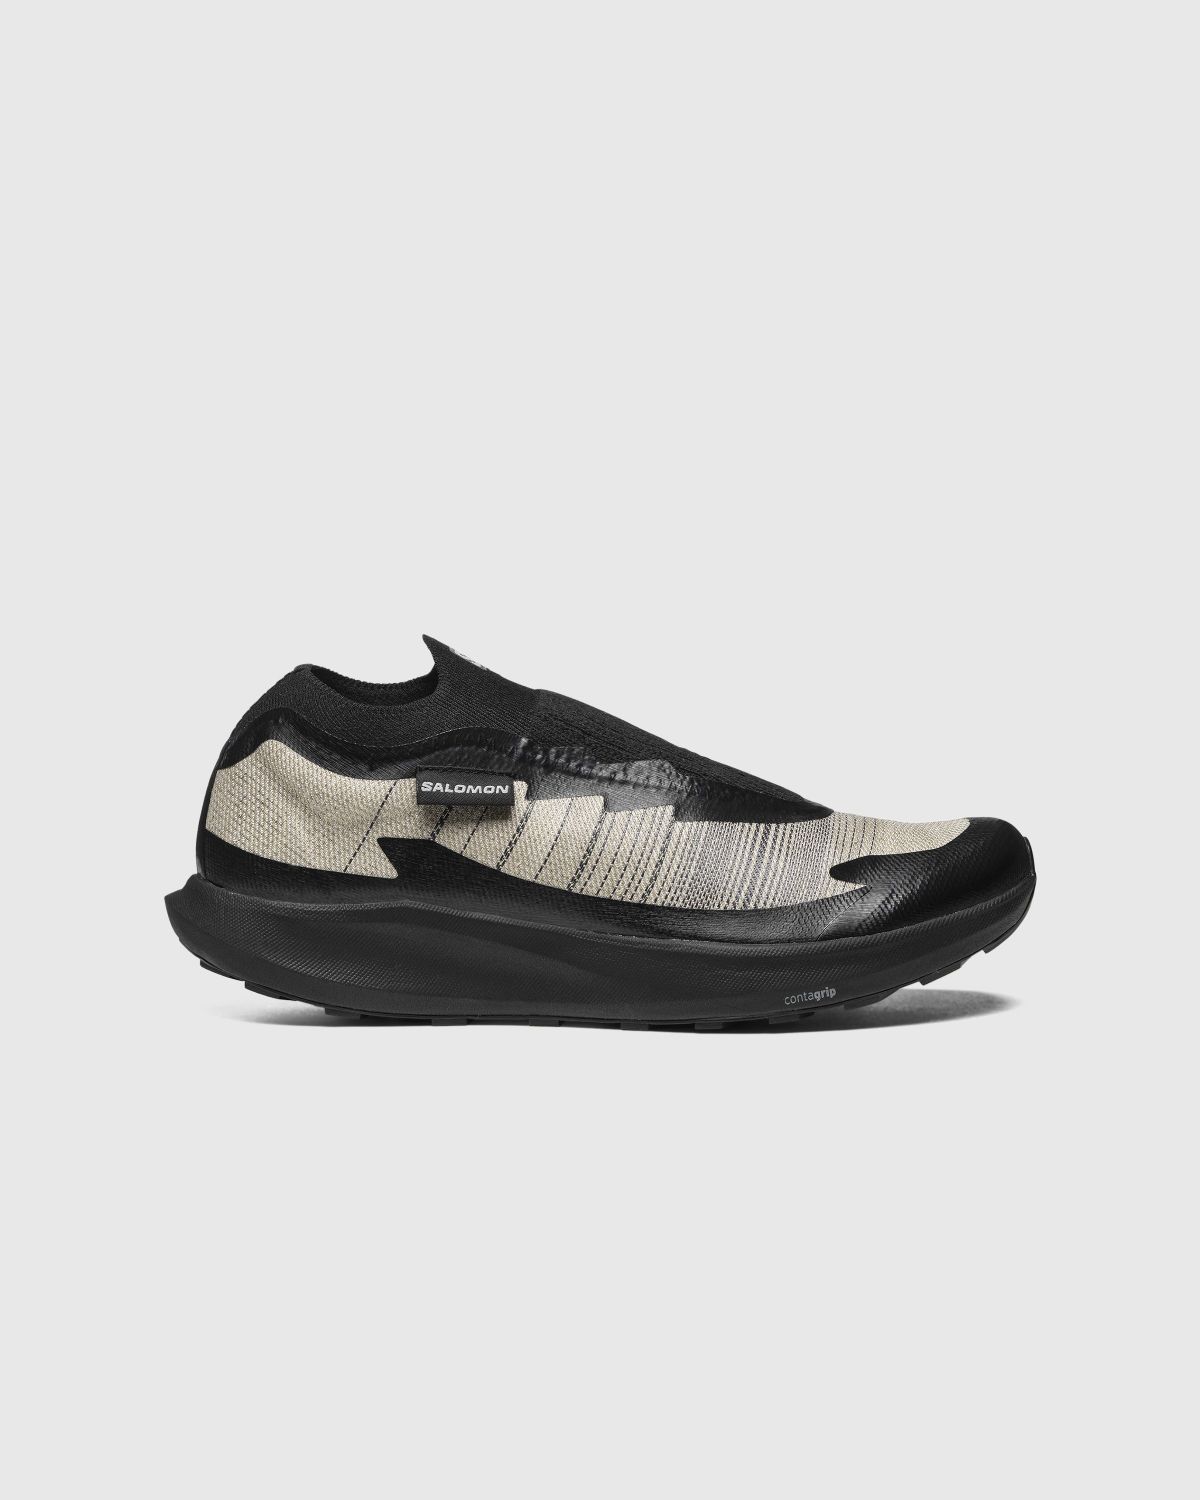 Salomon – PULSAR ADVANCED Black/Black/Pewter - Sneakers - Black - Image 1